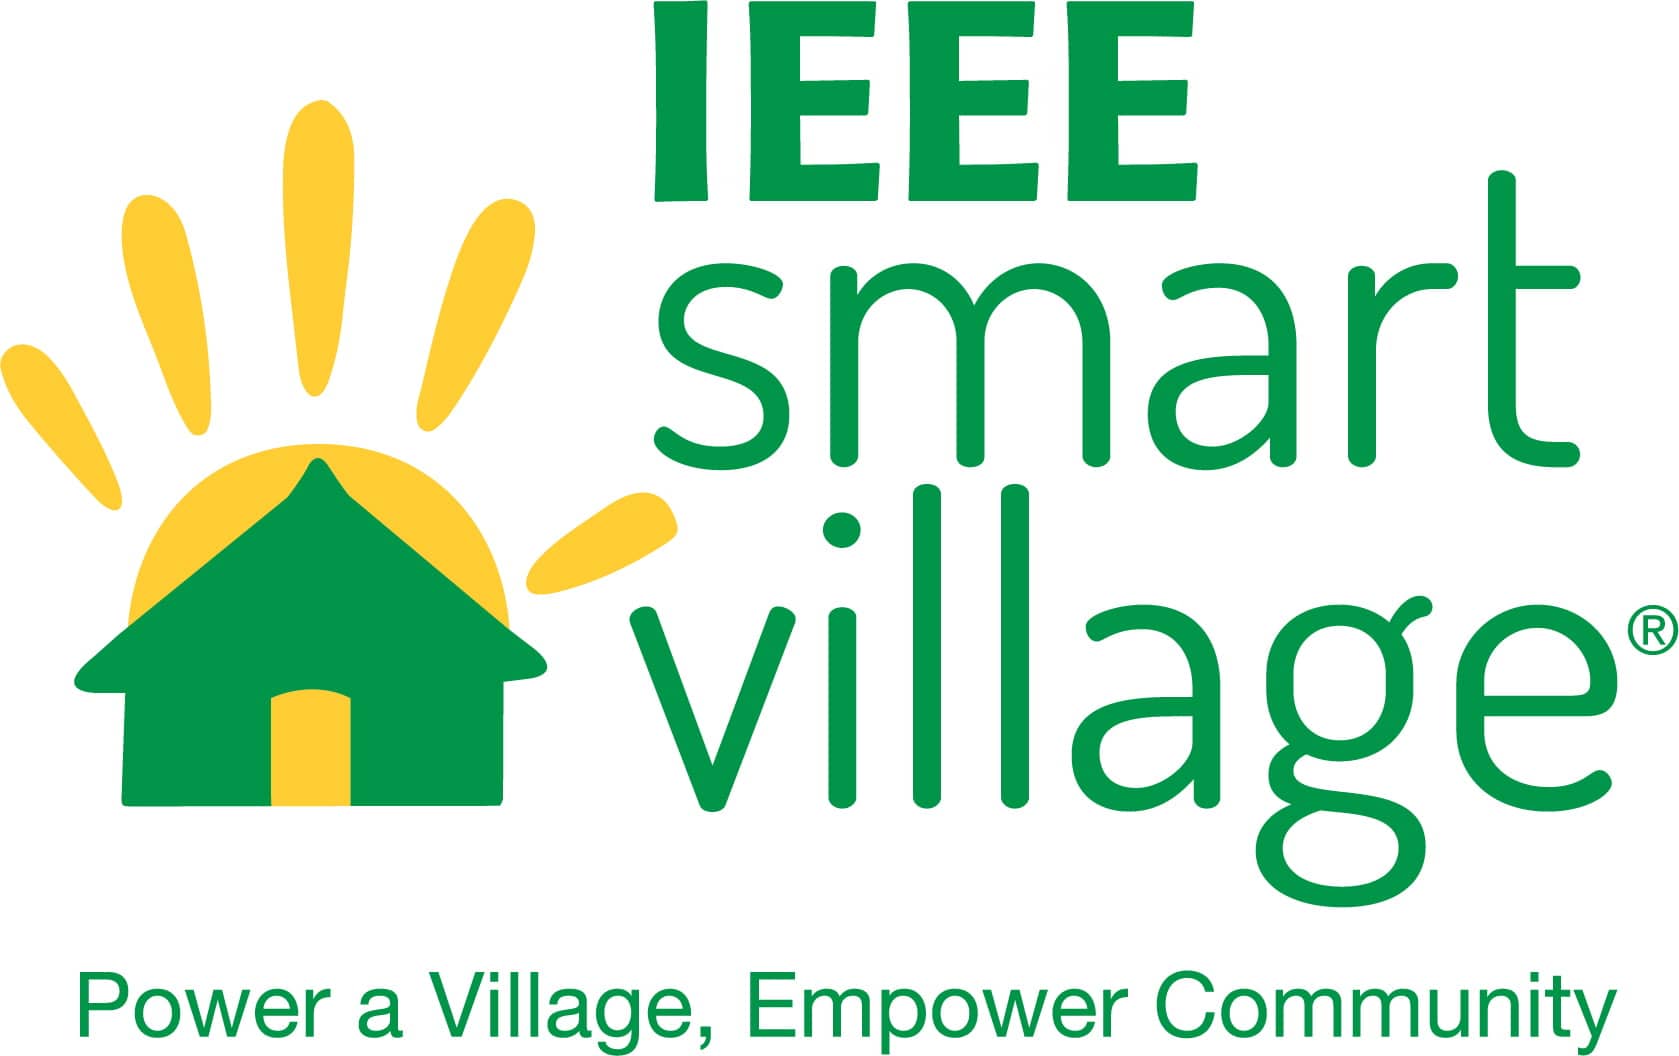 IEEE Smart Village Logo